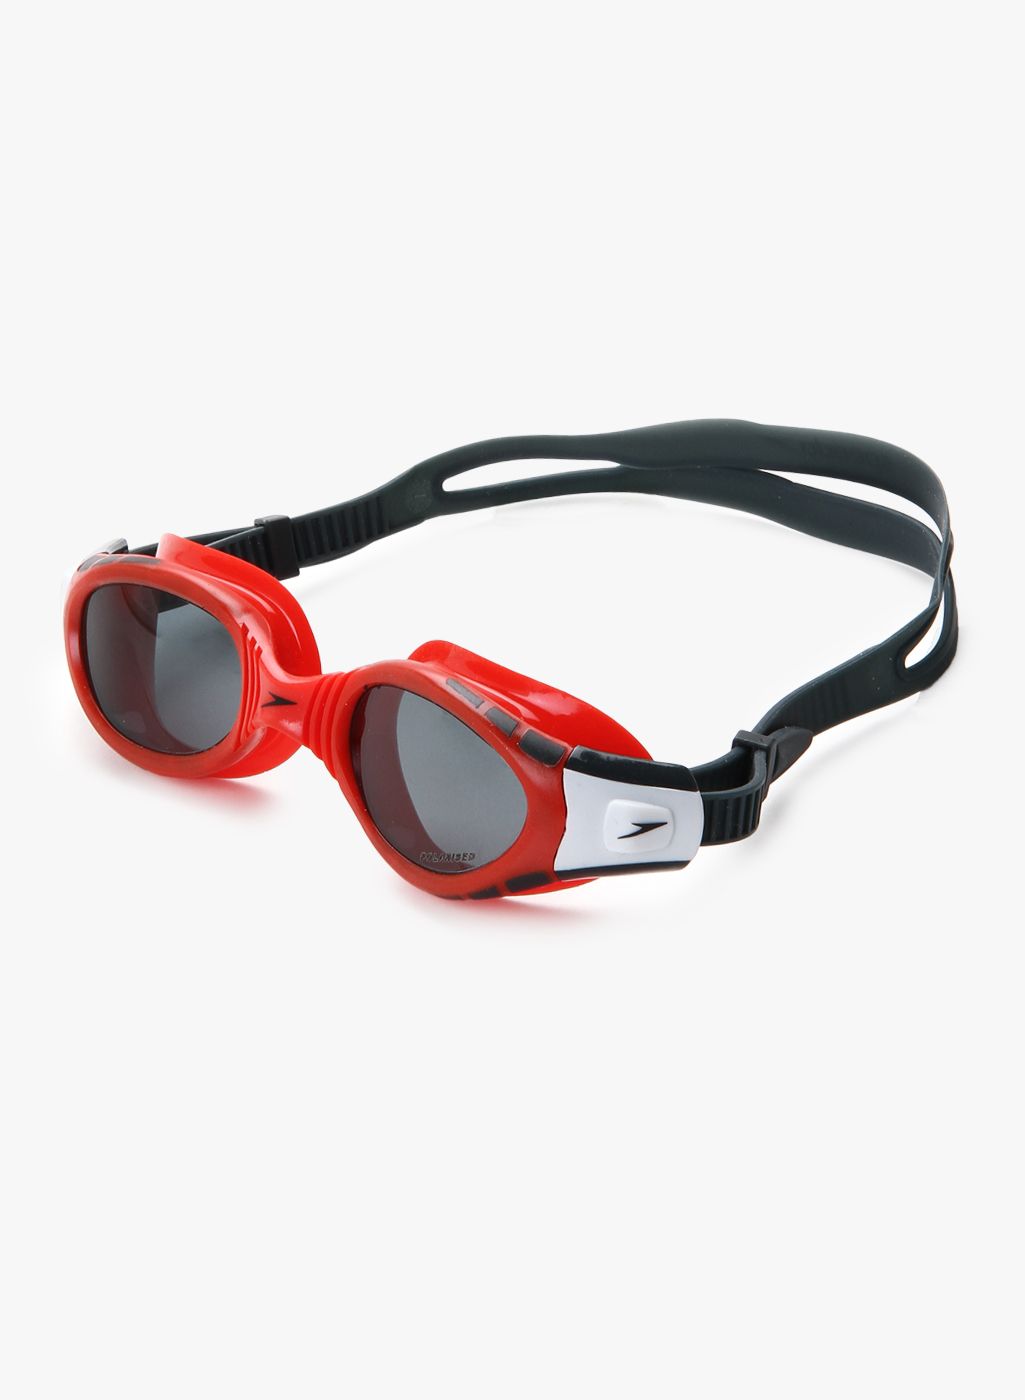 Speedo Unisex Red Swimming Goggles Price in India